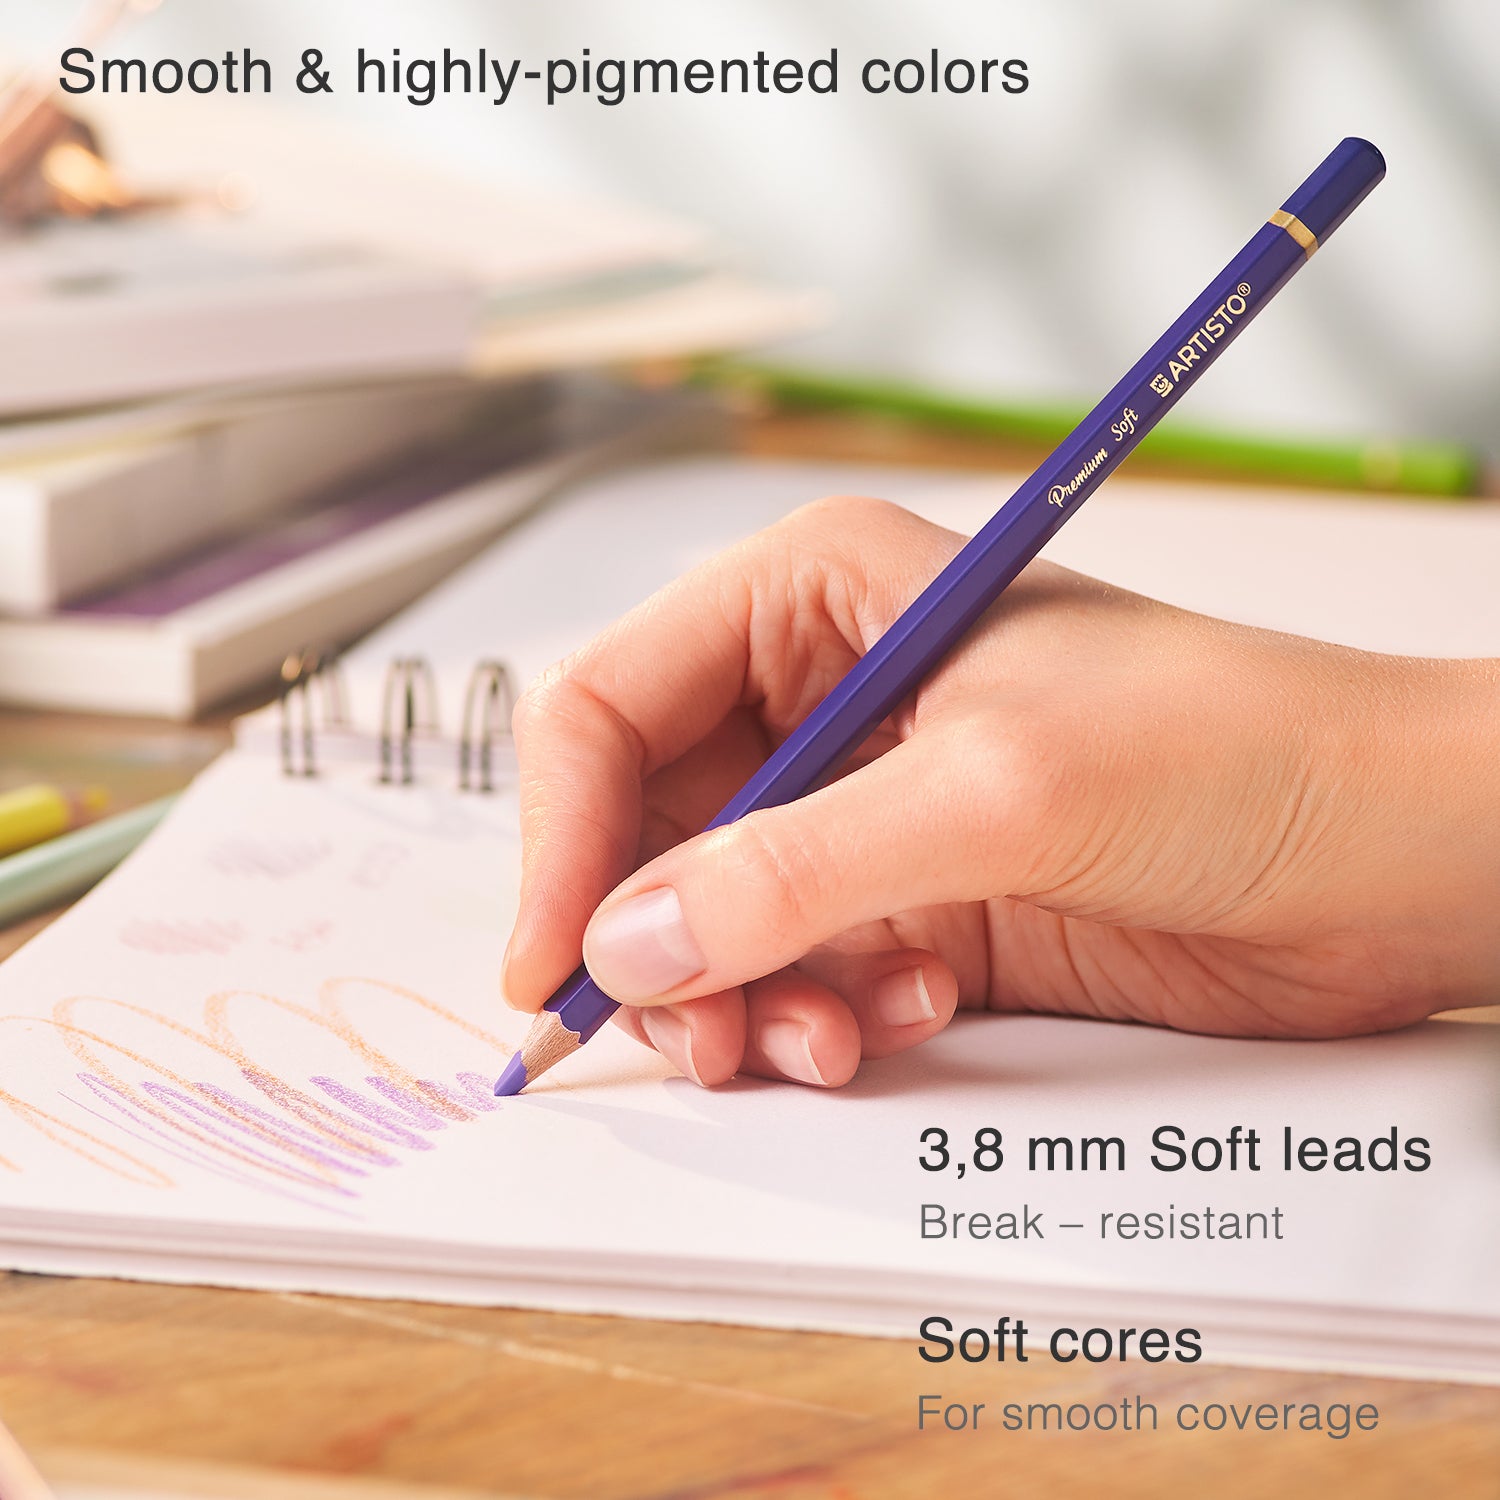 WA Portman 48 Colored Pencils and A5 Multimedia Sketchbook Drawing Set